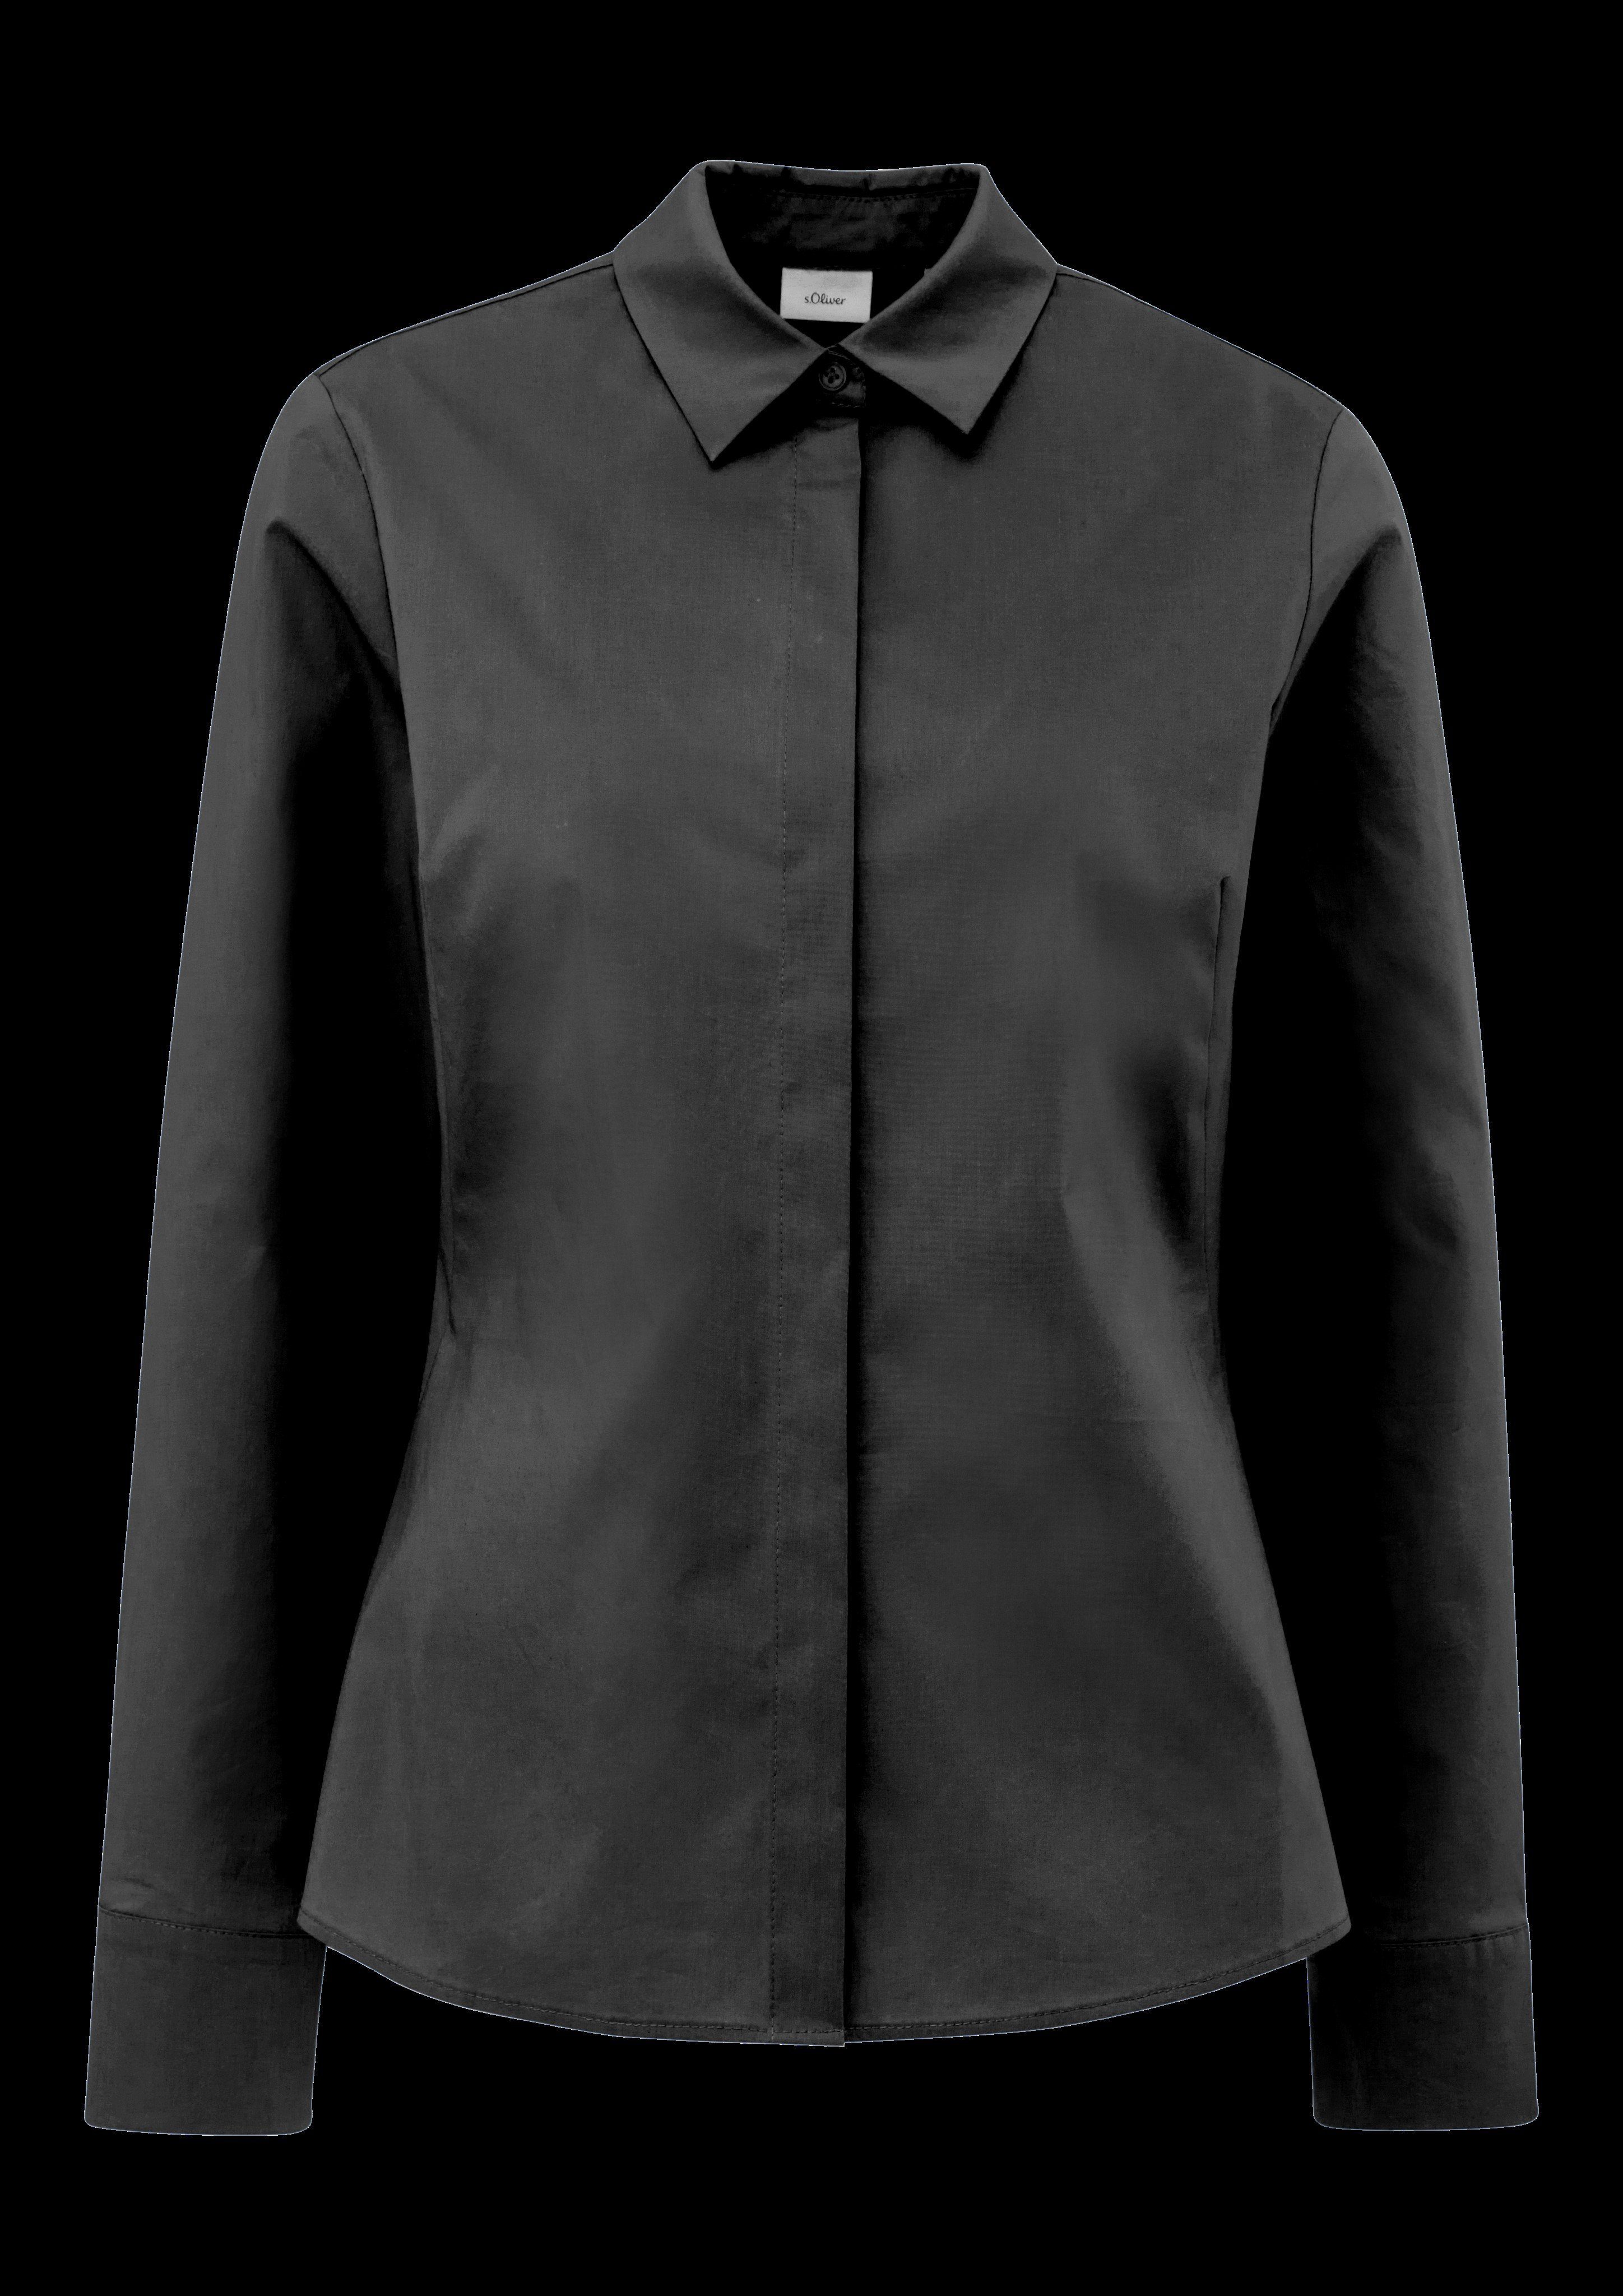 Bluse BLACK mit Knopfleiste grey/black s.Oliver verdeckter Klassische LABEL